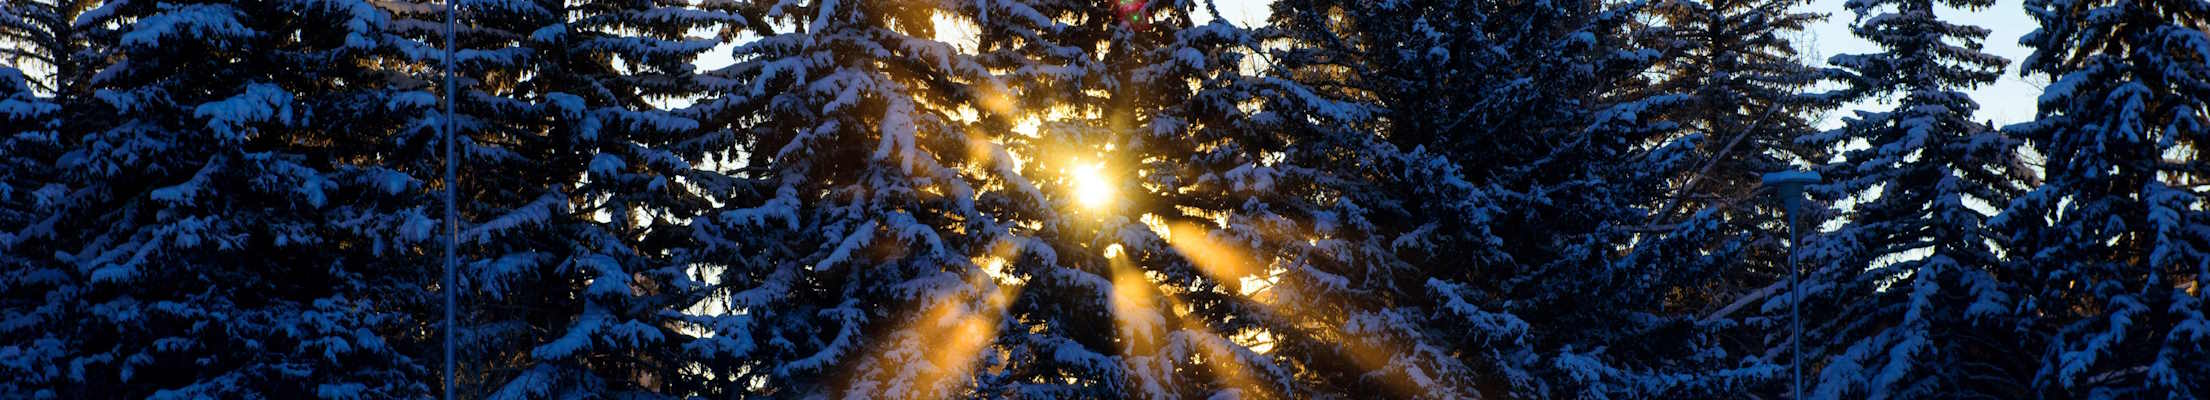 Sunlight shining through a wintry pine tree canopy